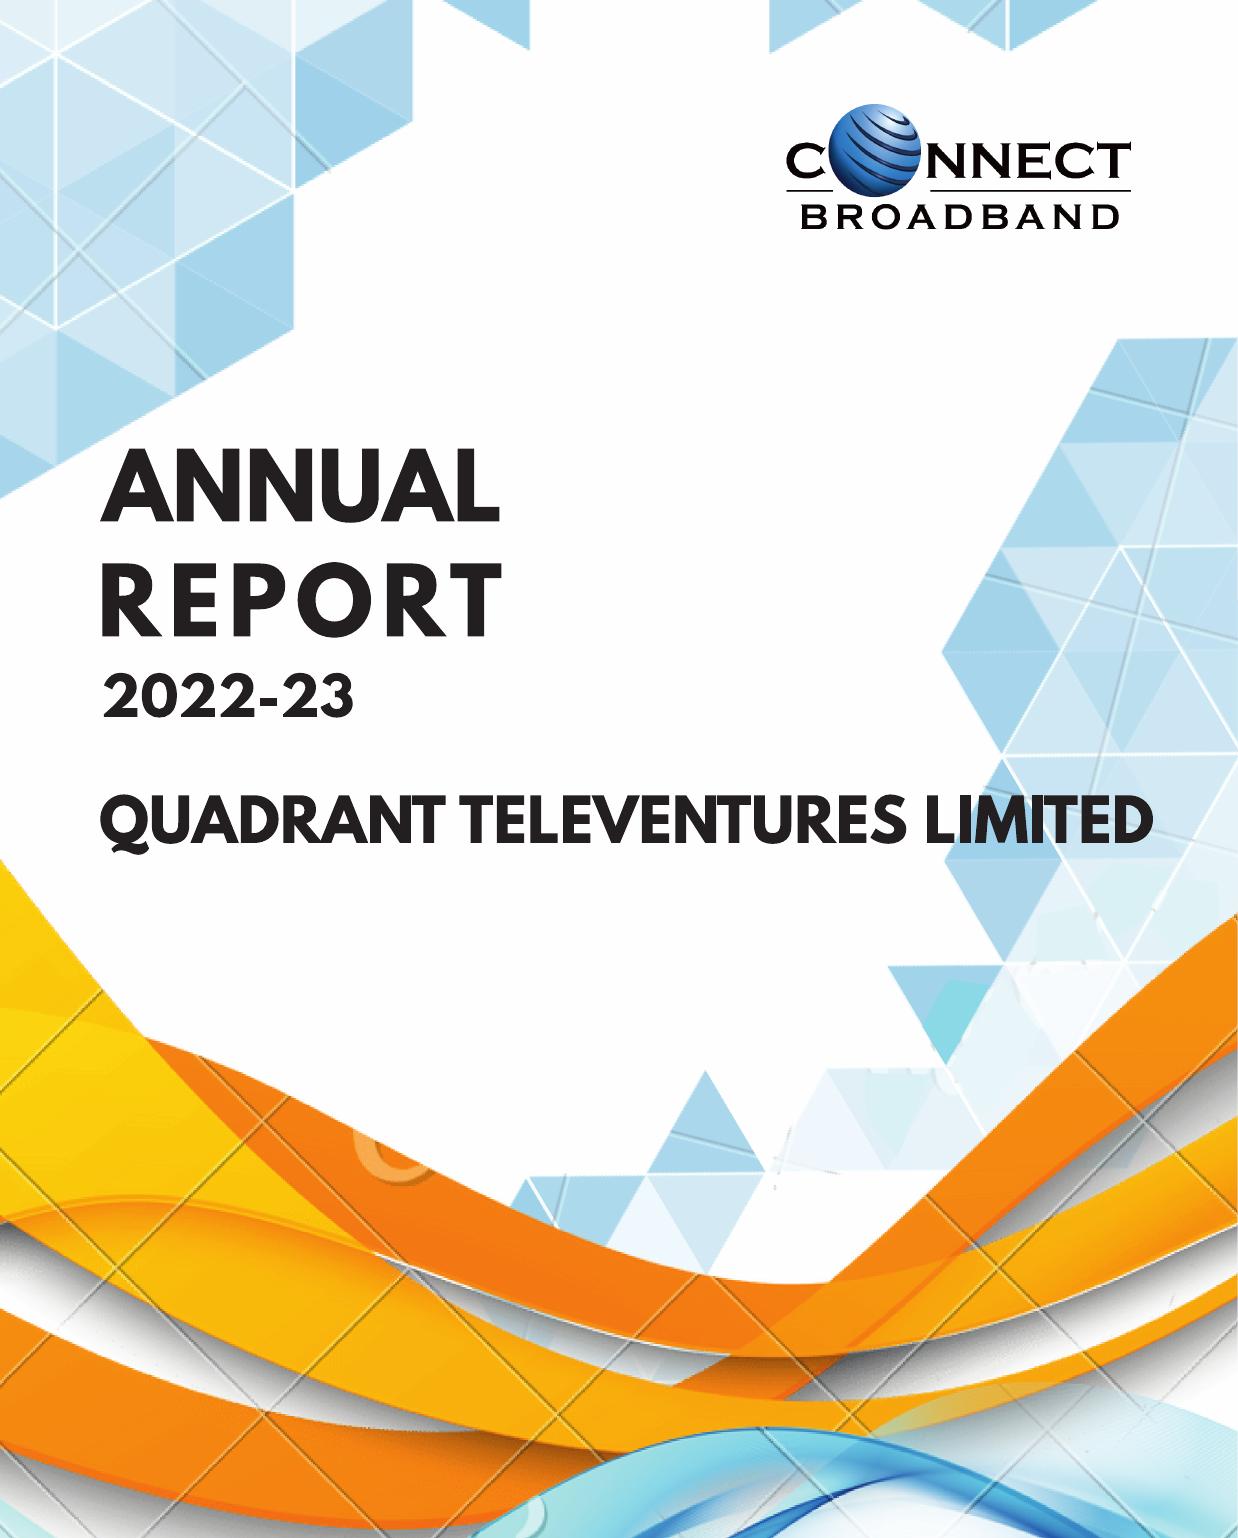 BLSATTESTATION 2022 Annual Report